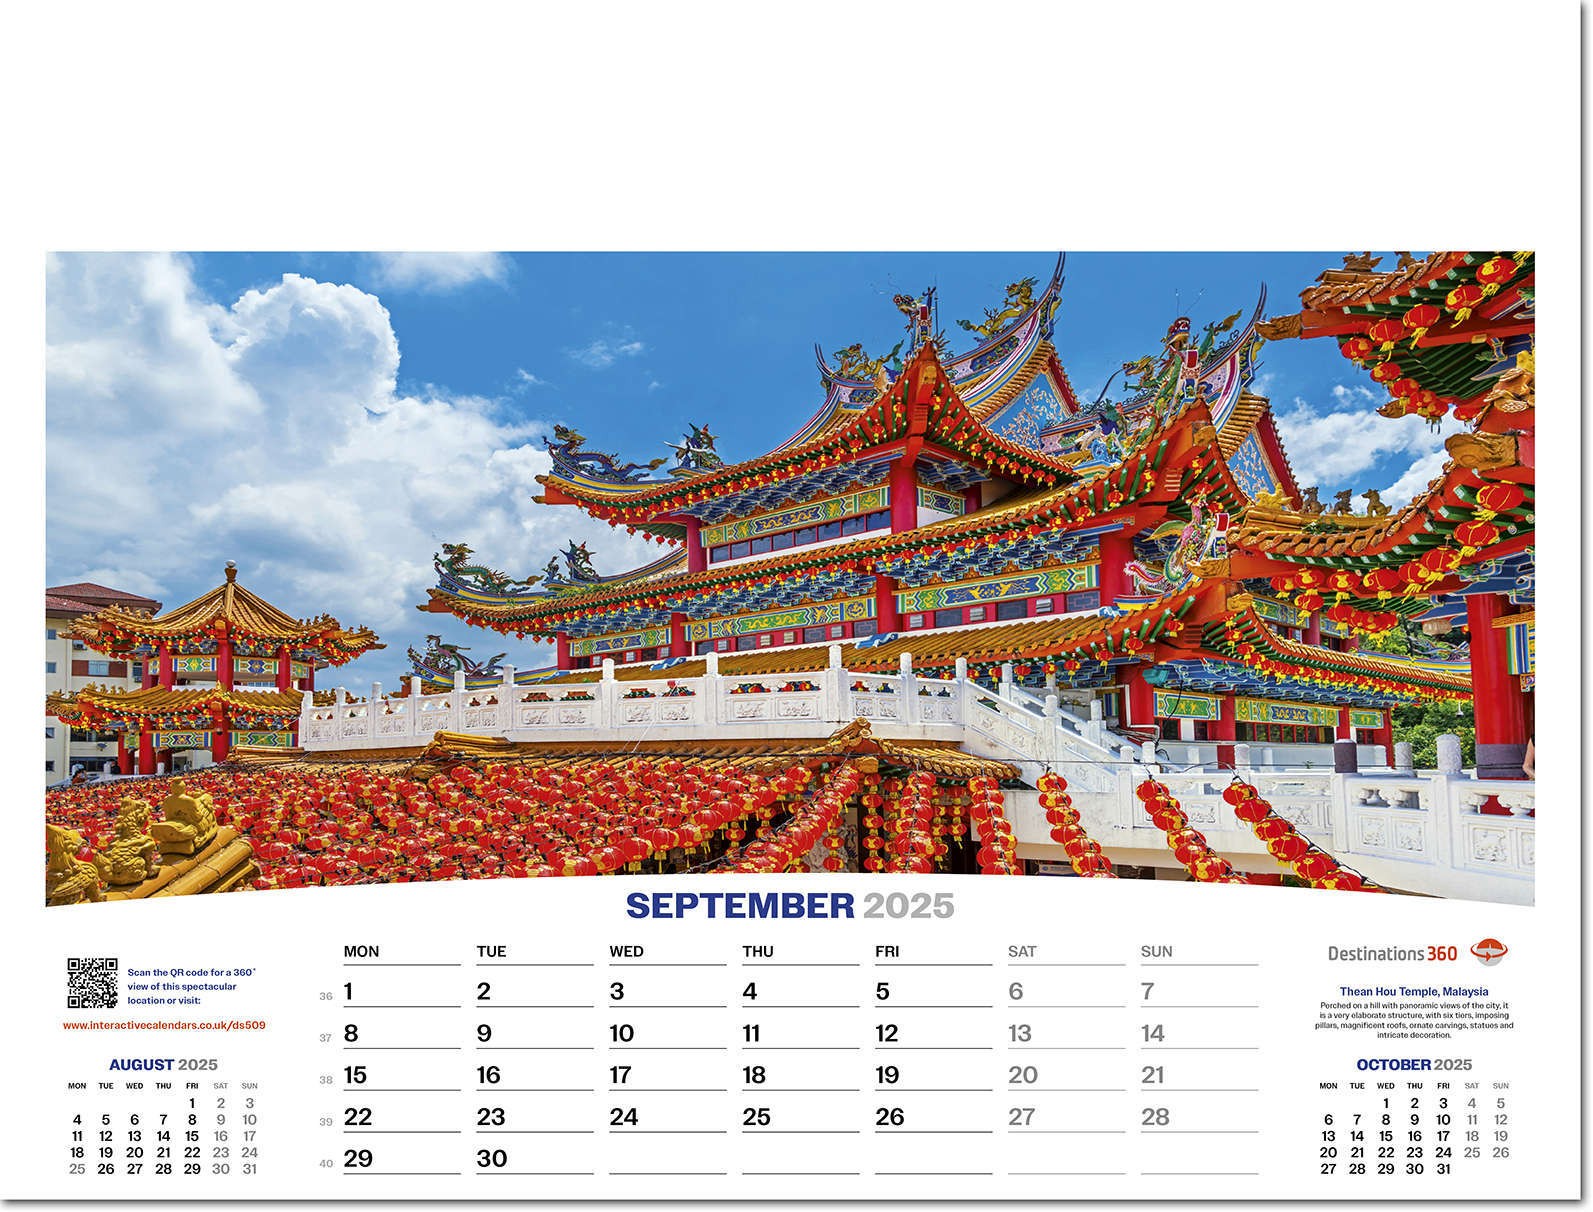 Destinations360 Calendar